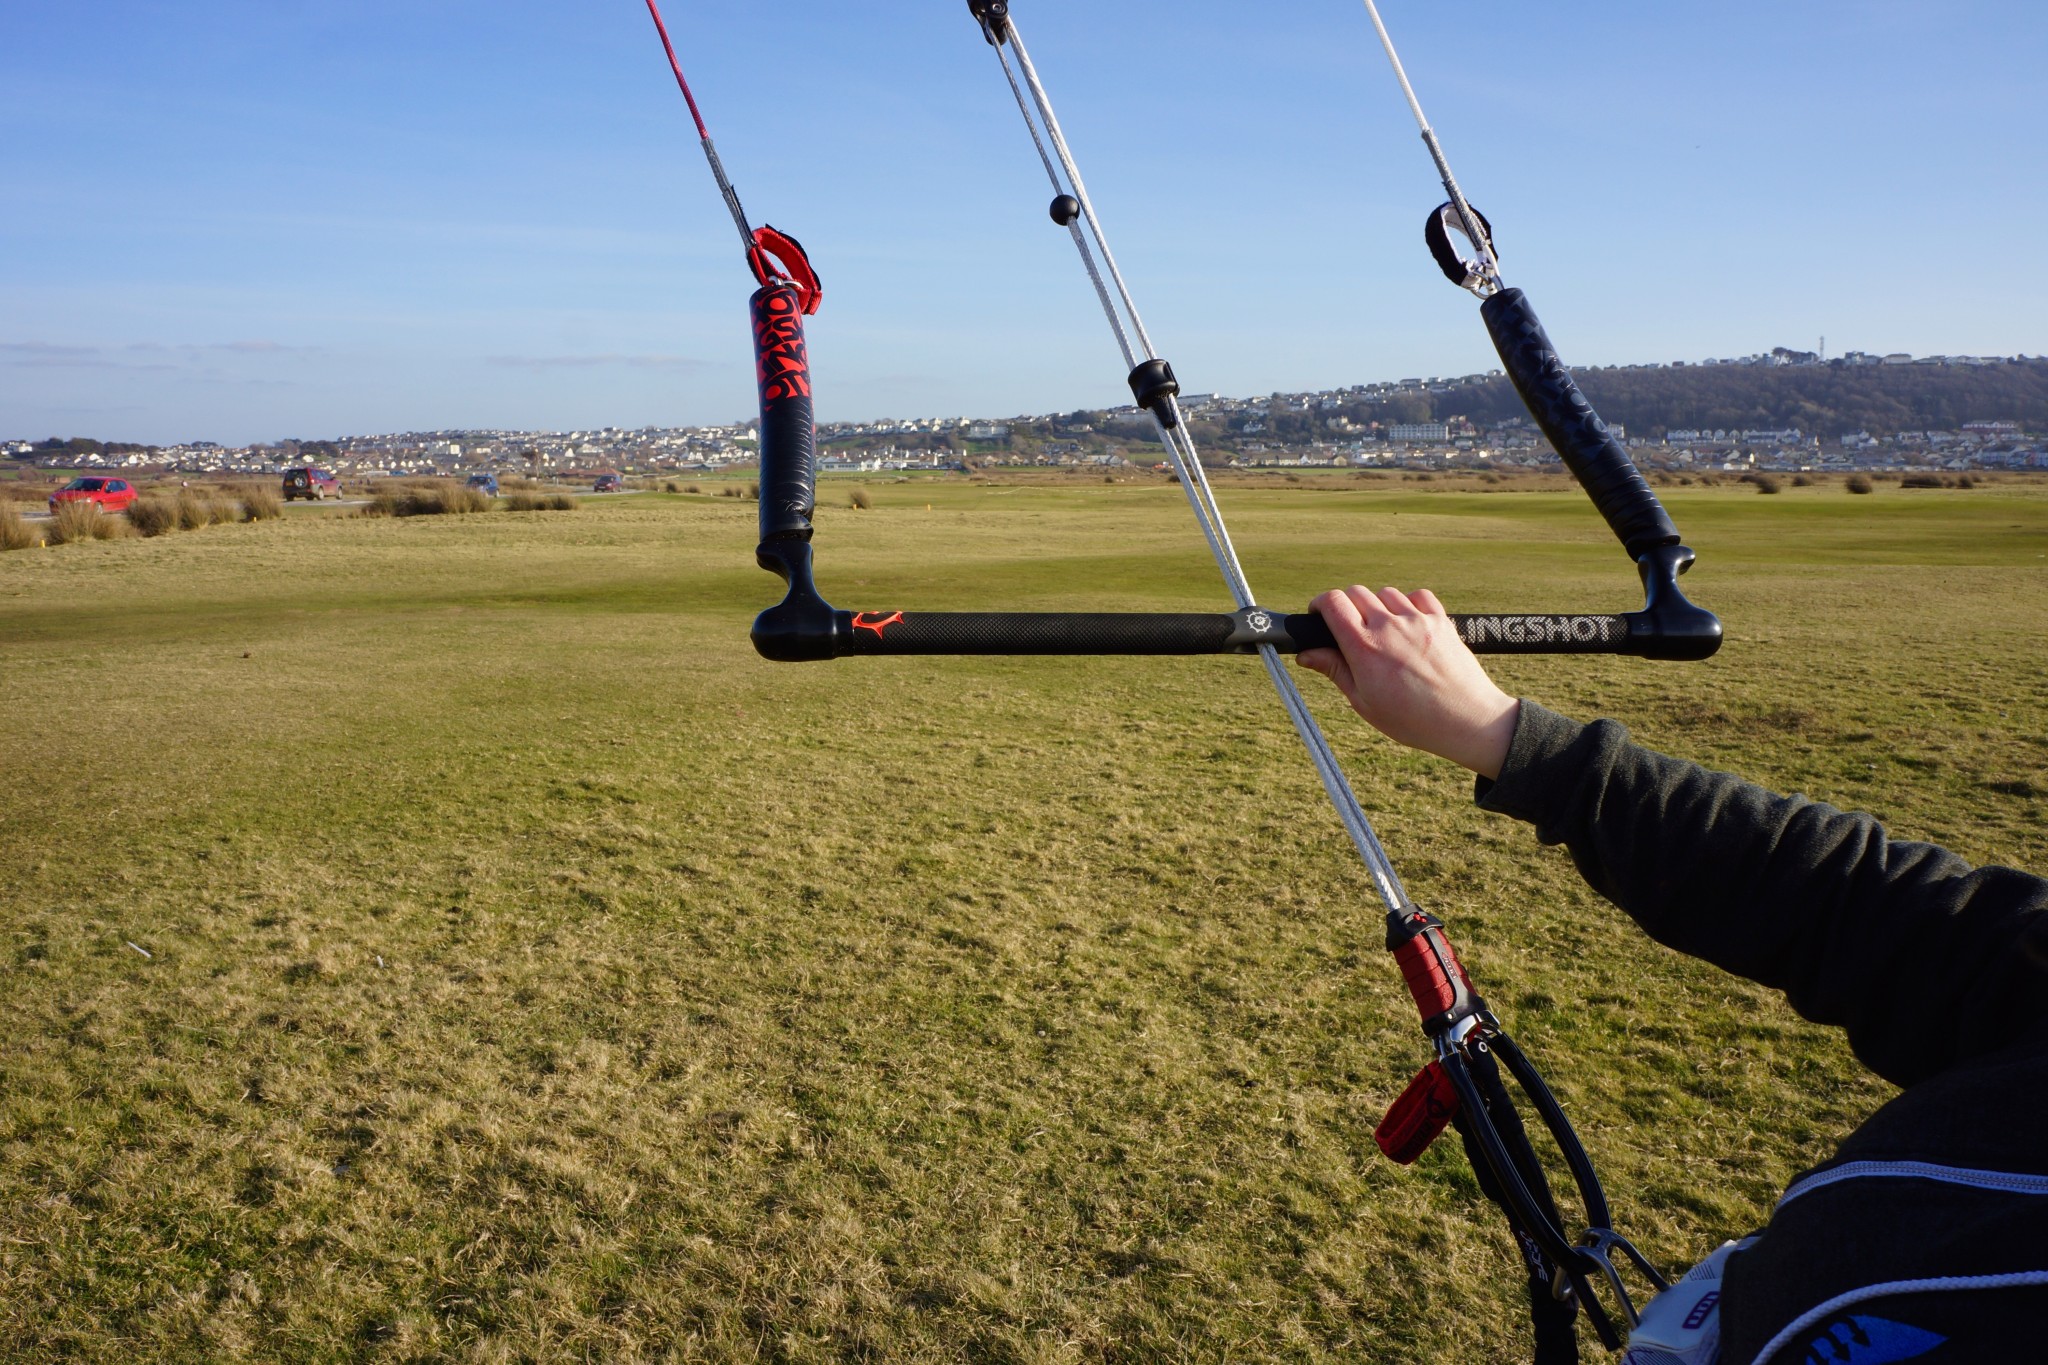 Slingshot RPM 9m 2015 | Kitesurfing Reviews » Kites | Free Kitesurfing